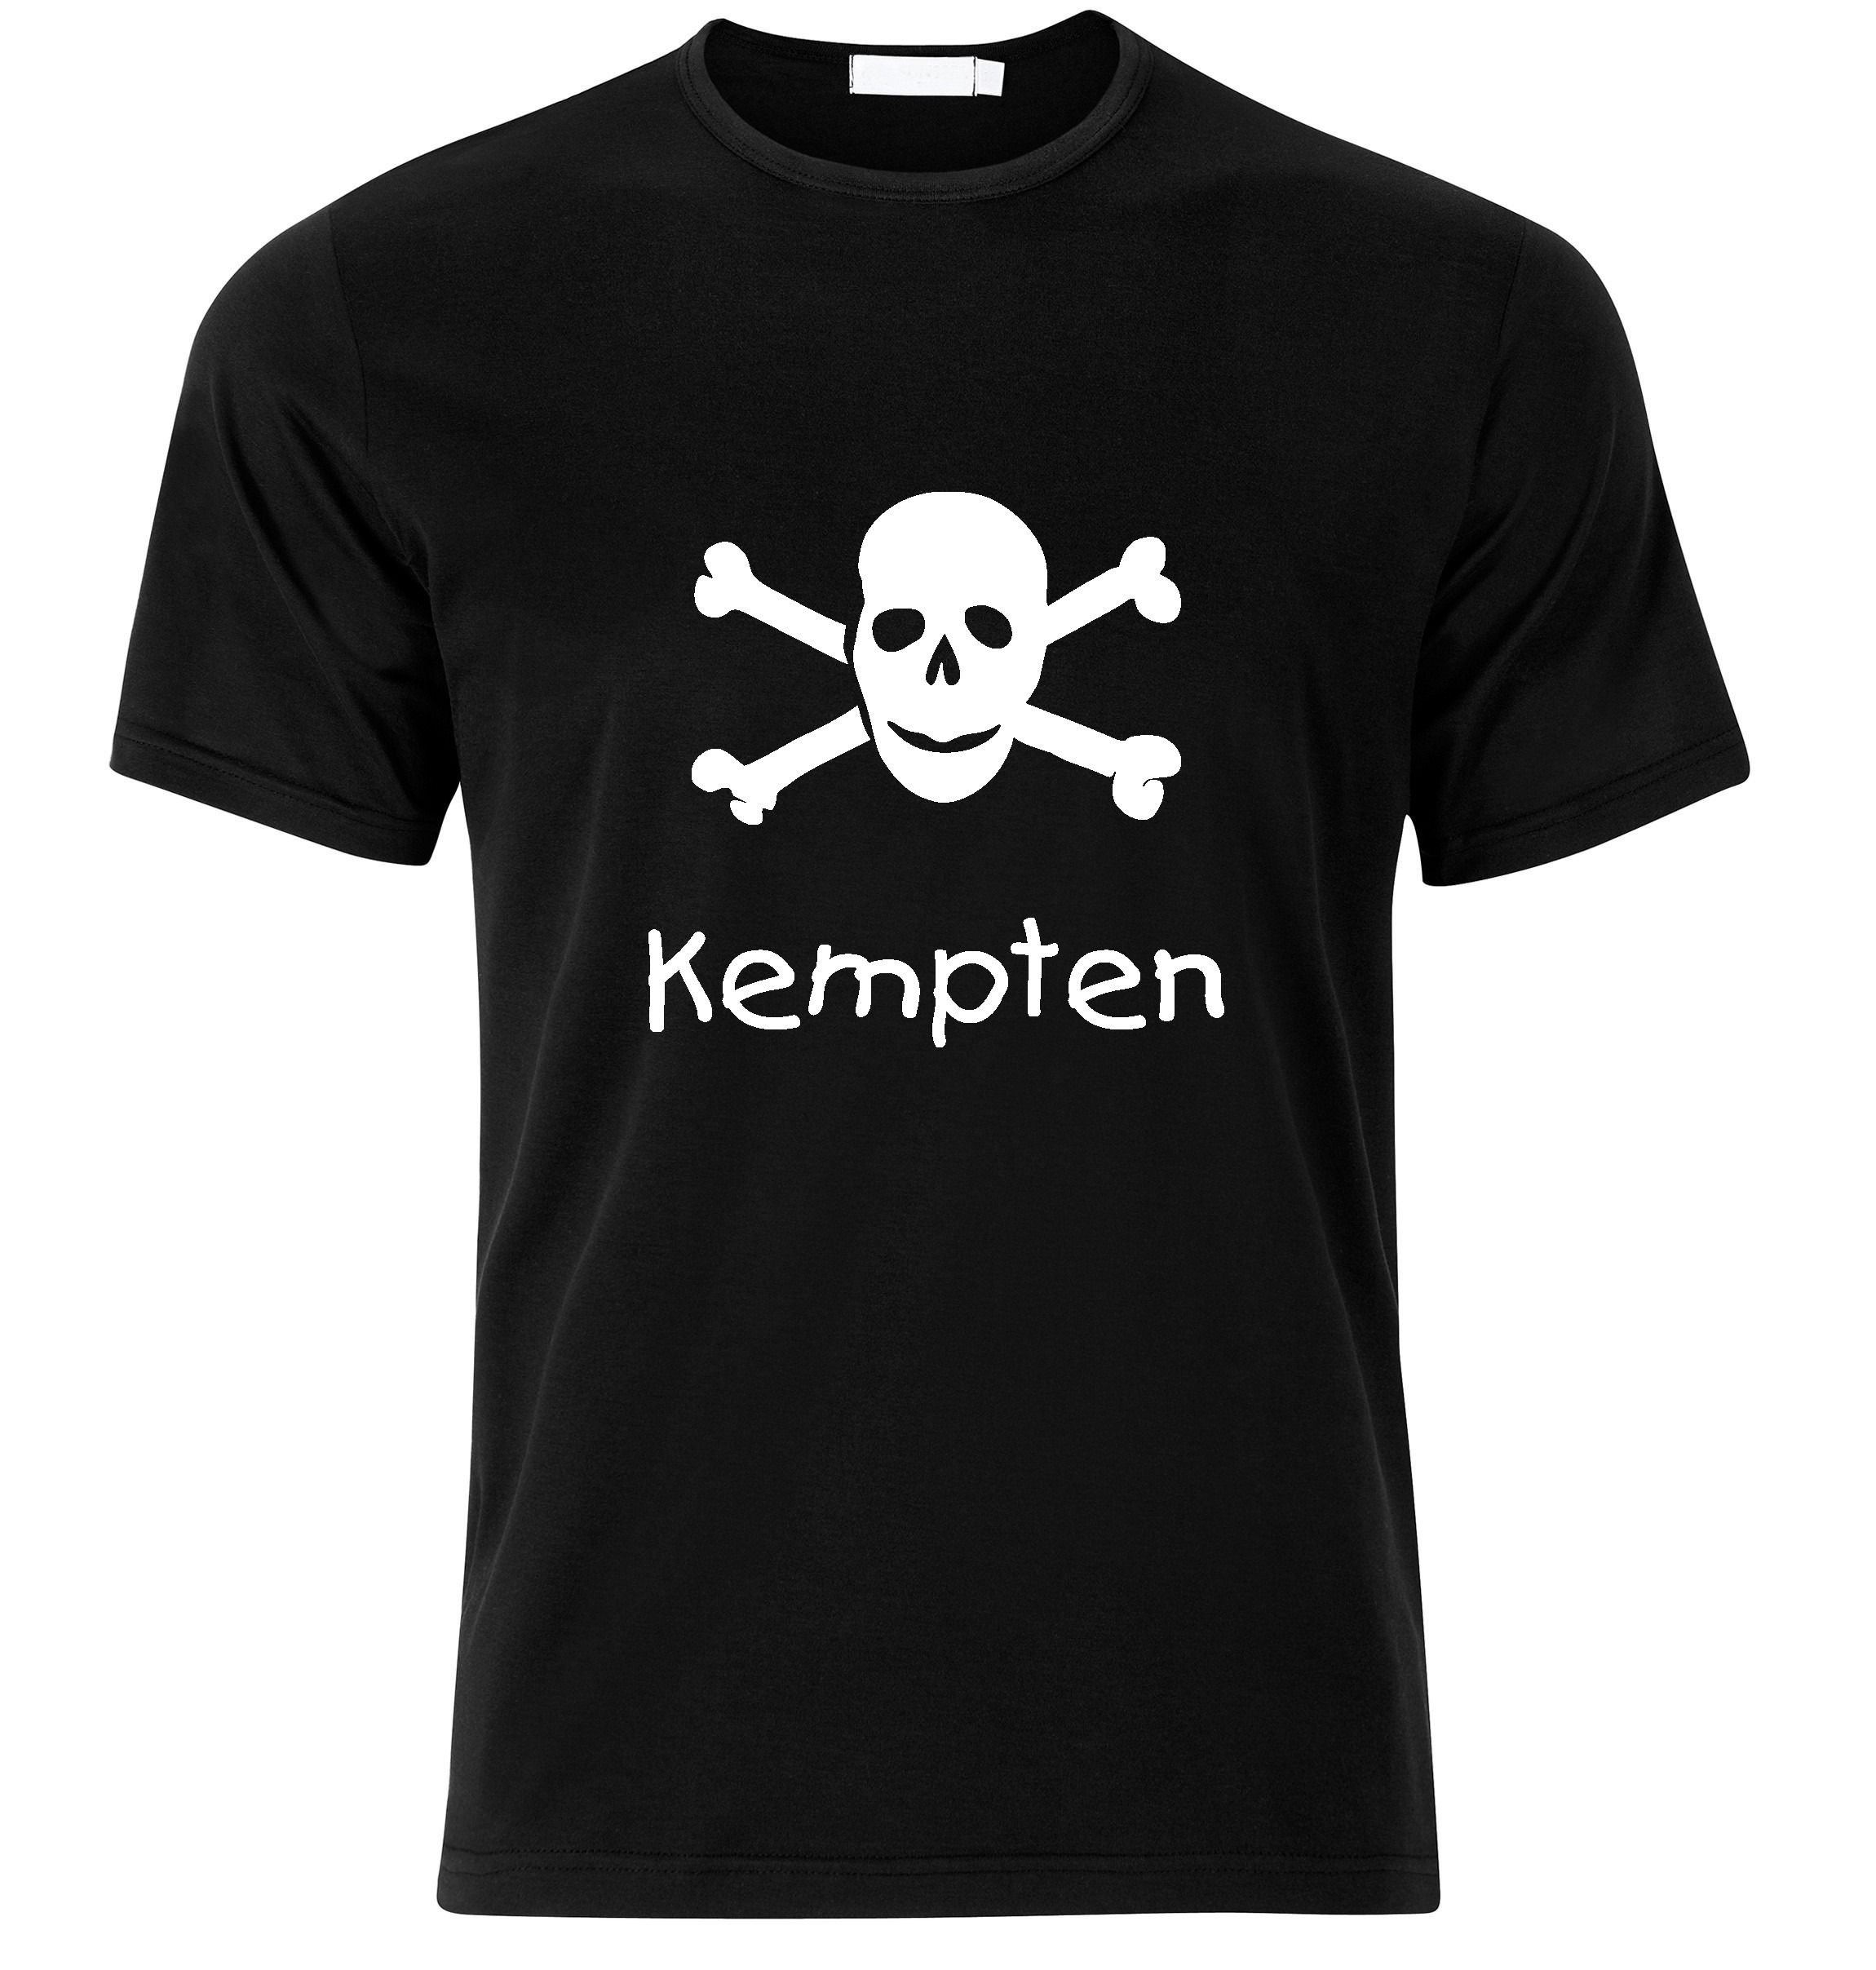 T-Shirt Kempten Jolly Roger, Totenkopf